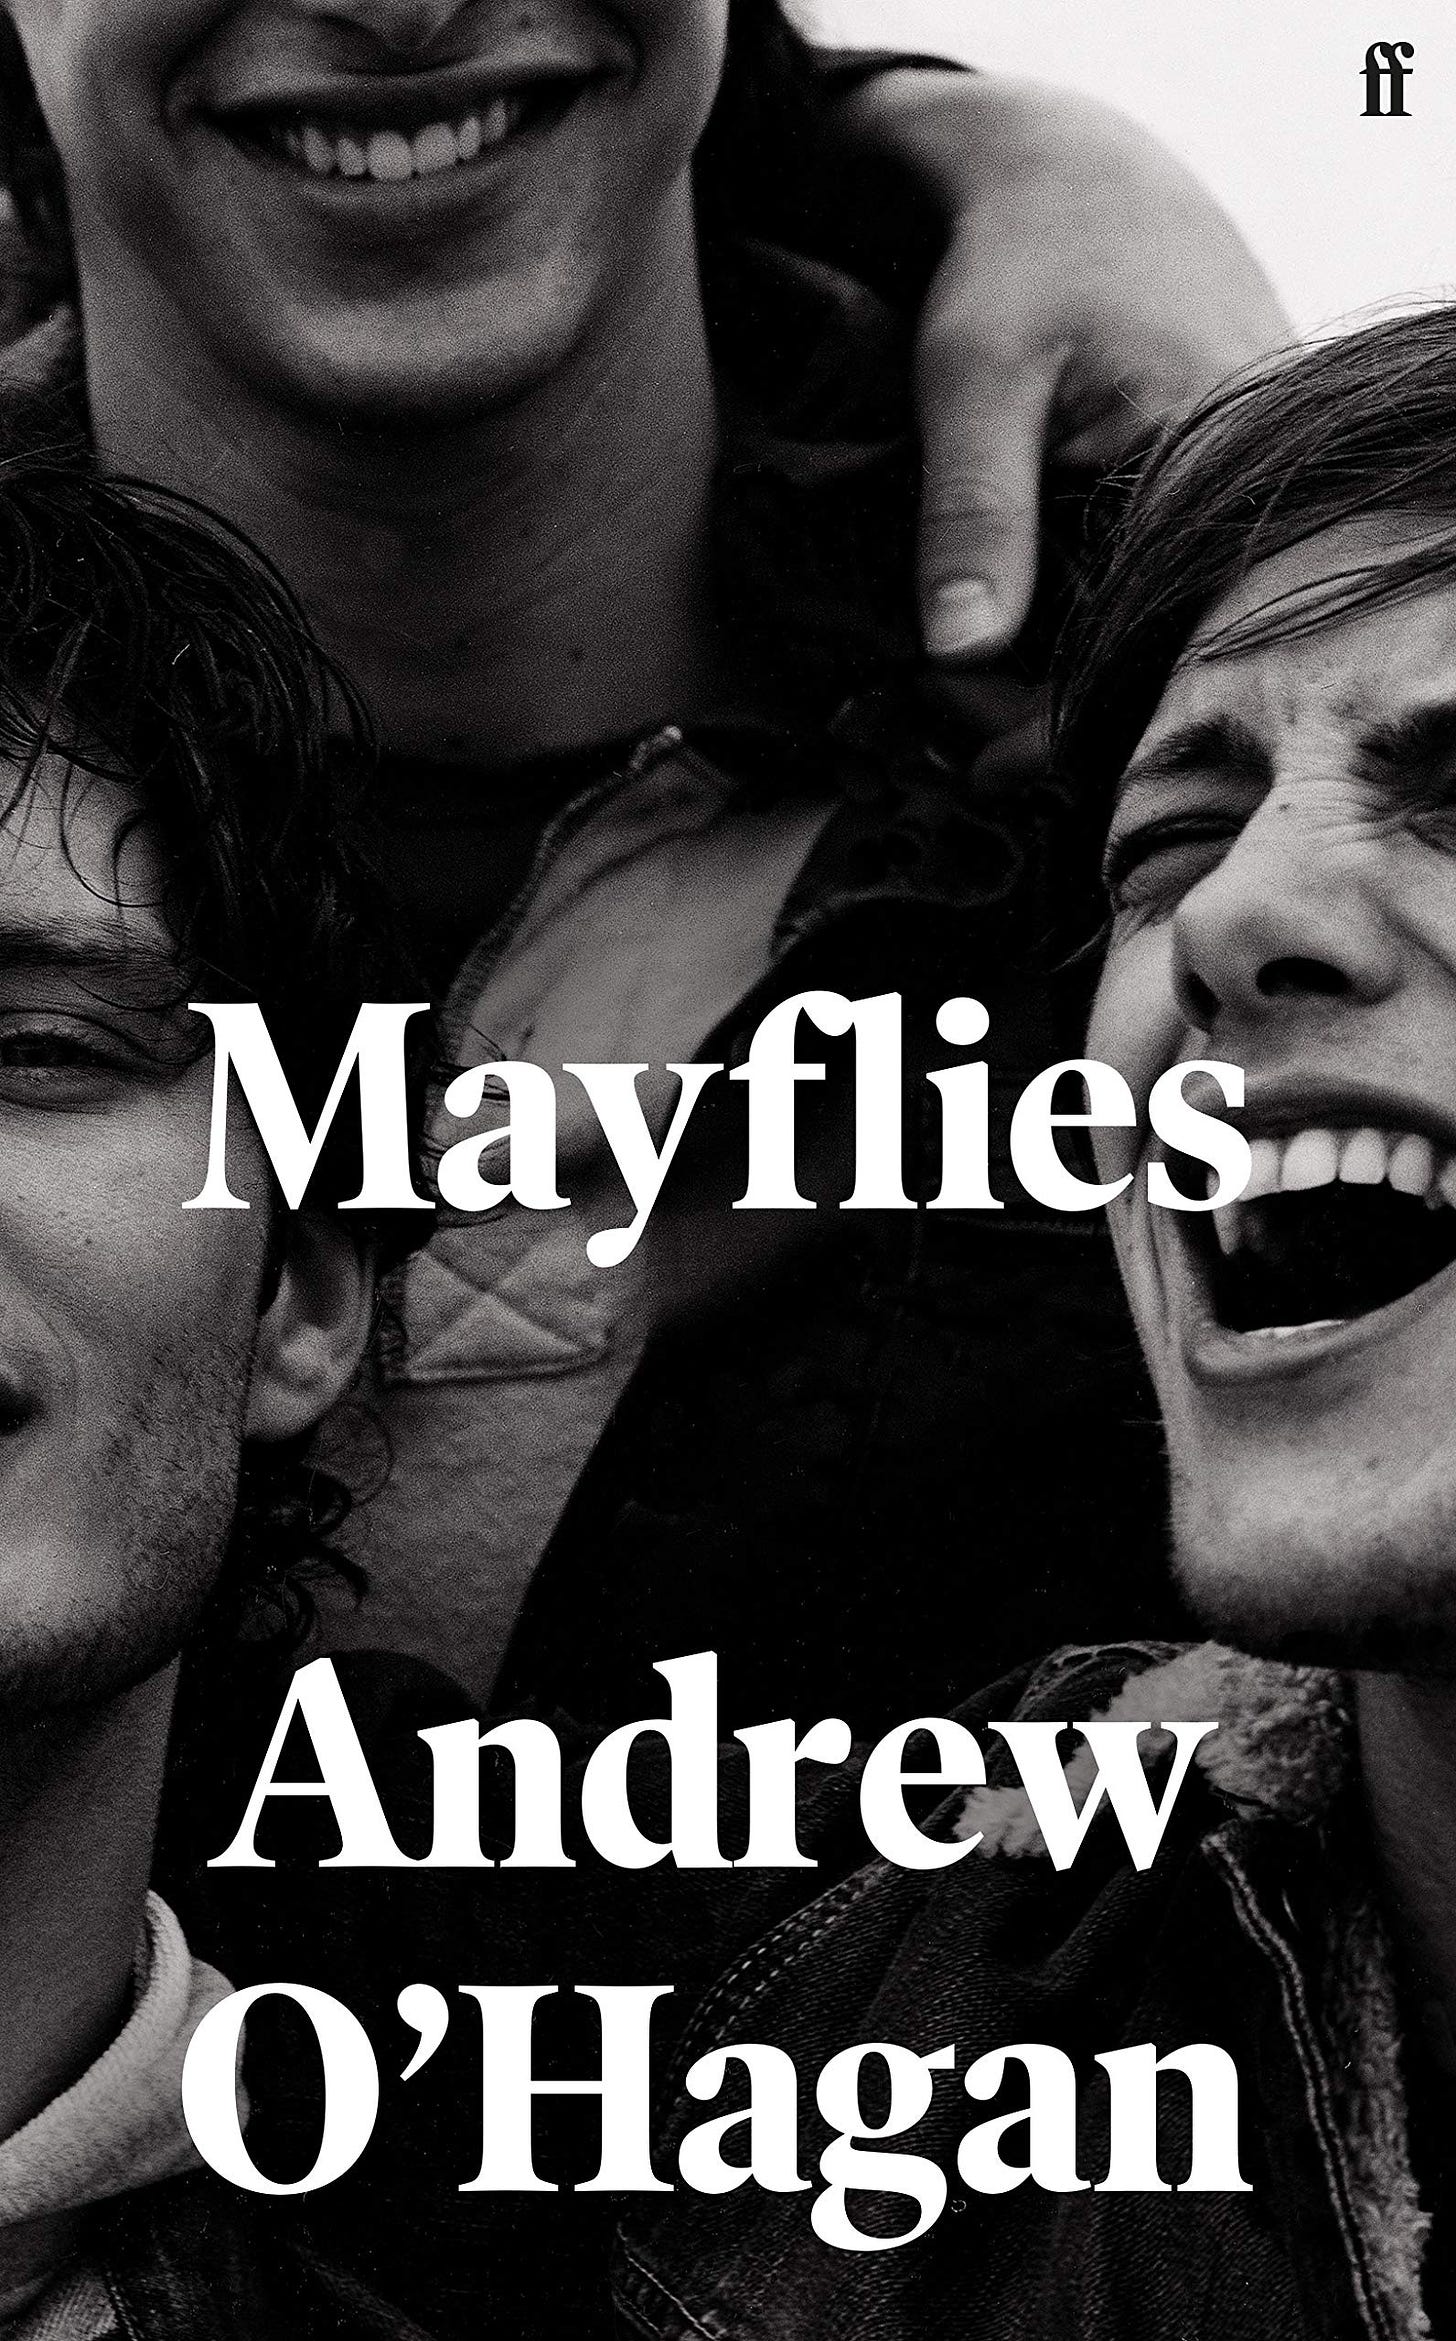 Mayflies: Amazon.co.uk: O'Hagan, Andrew: 9780571273683: Books